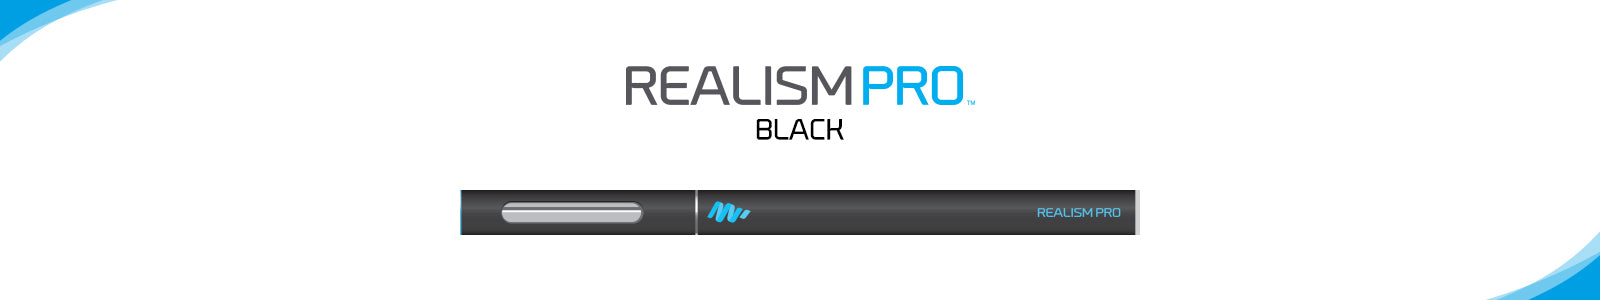 Realism Pro Black